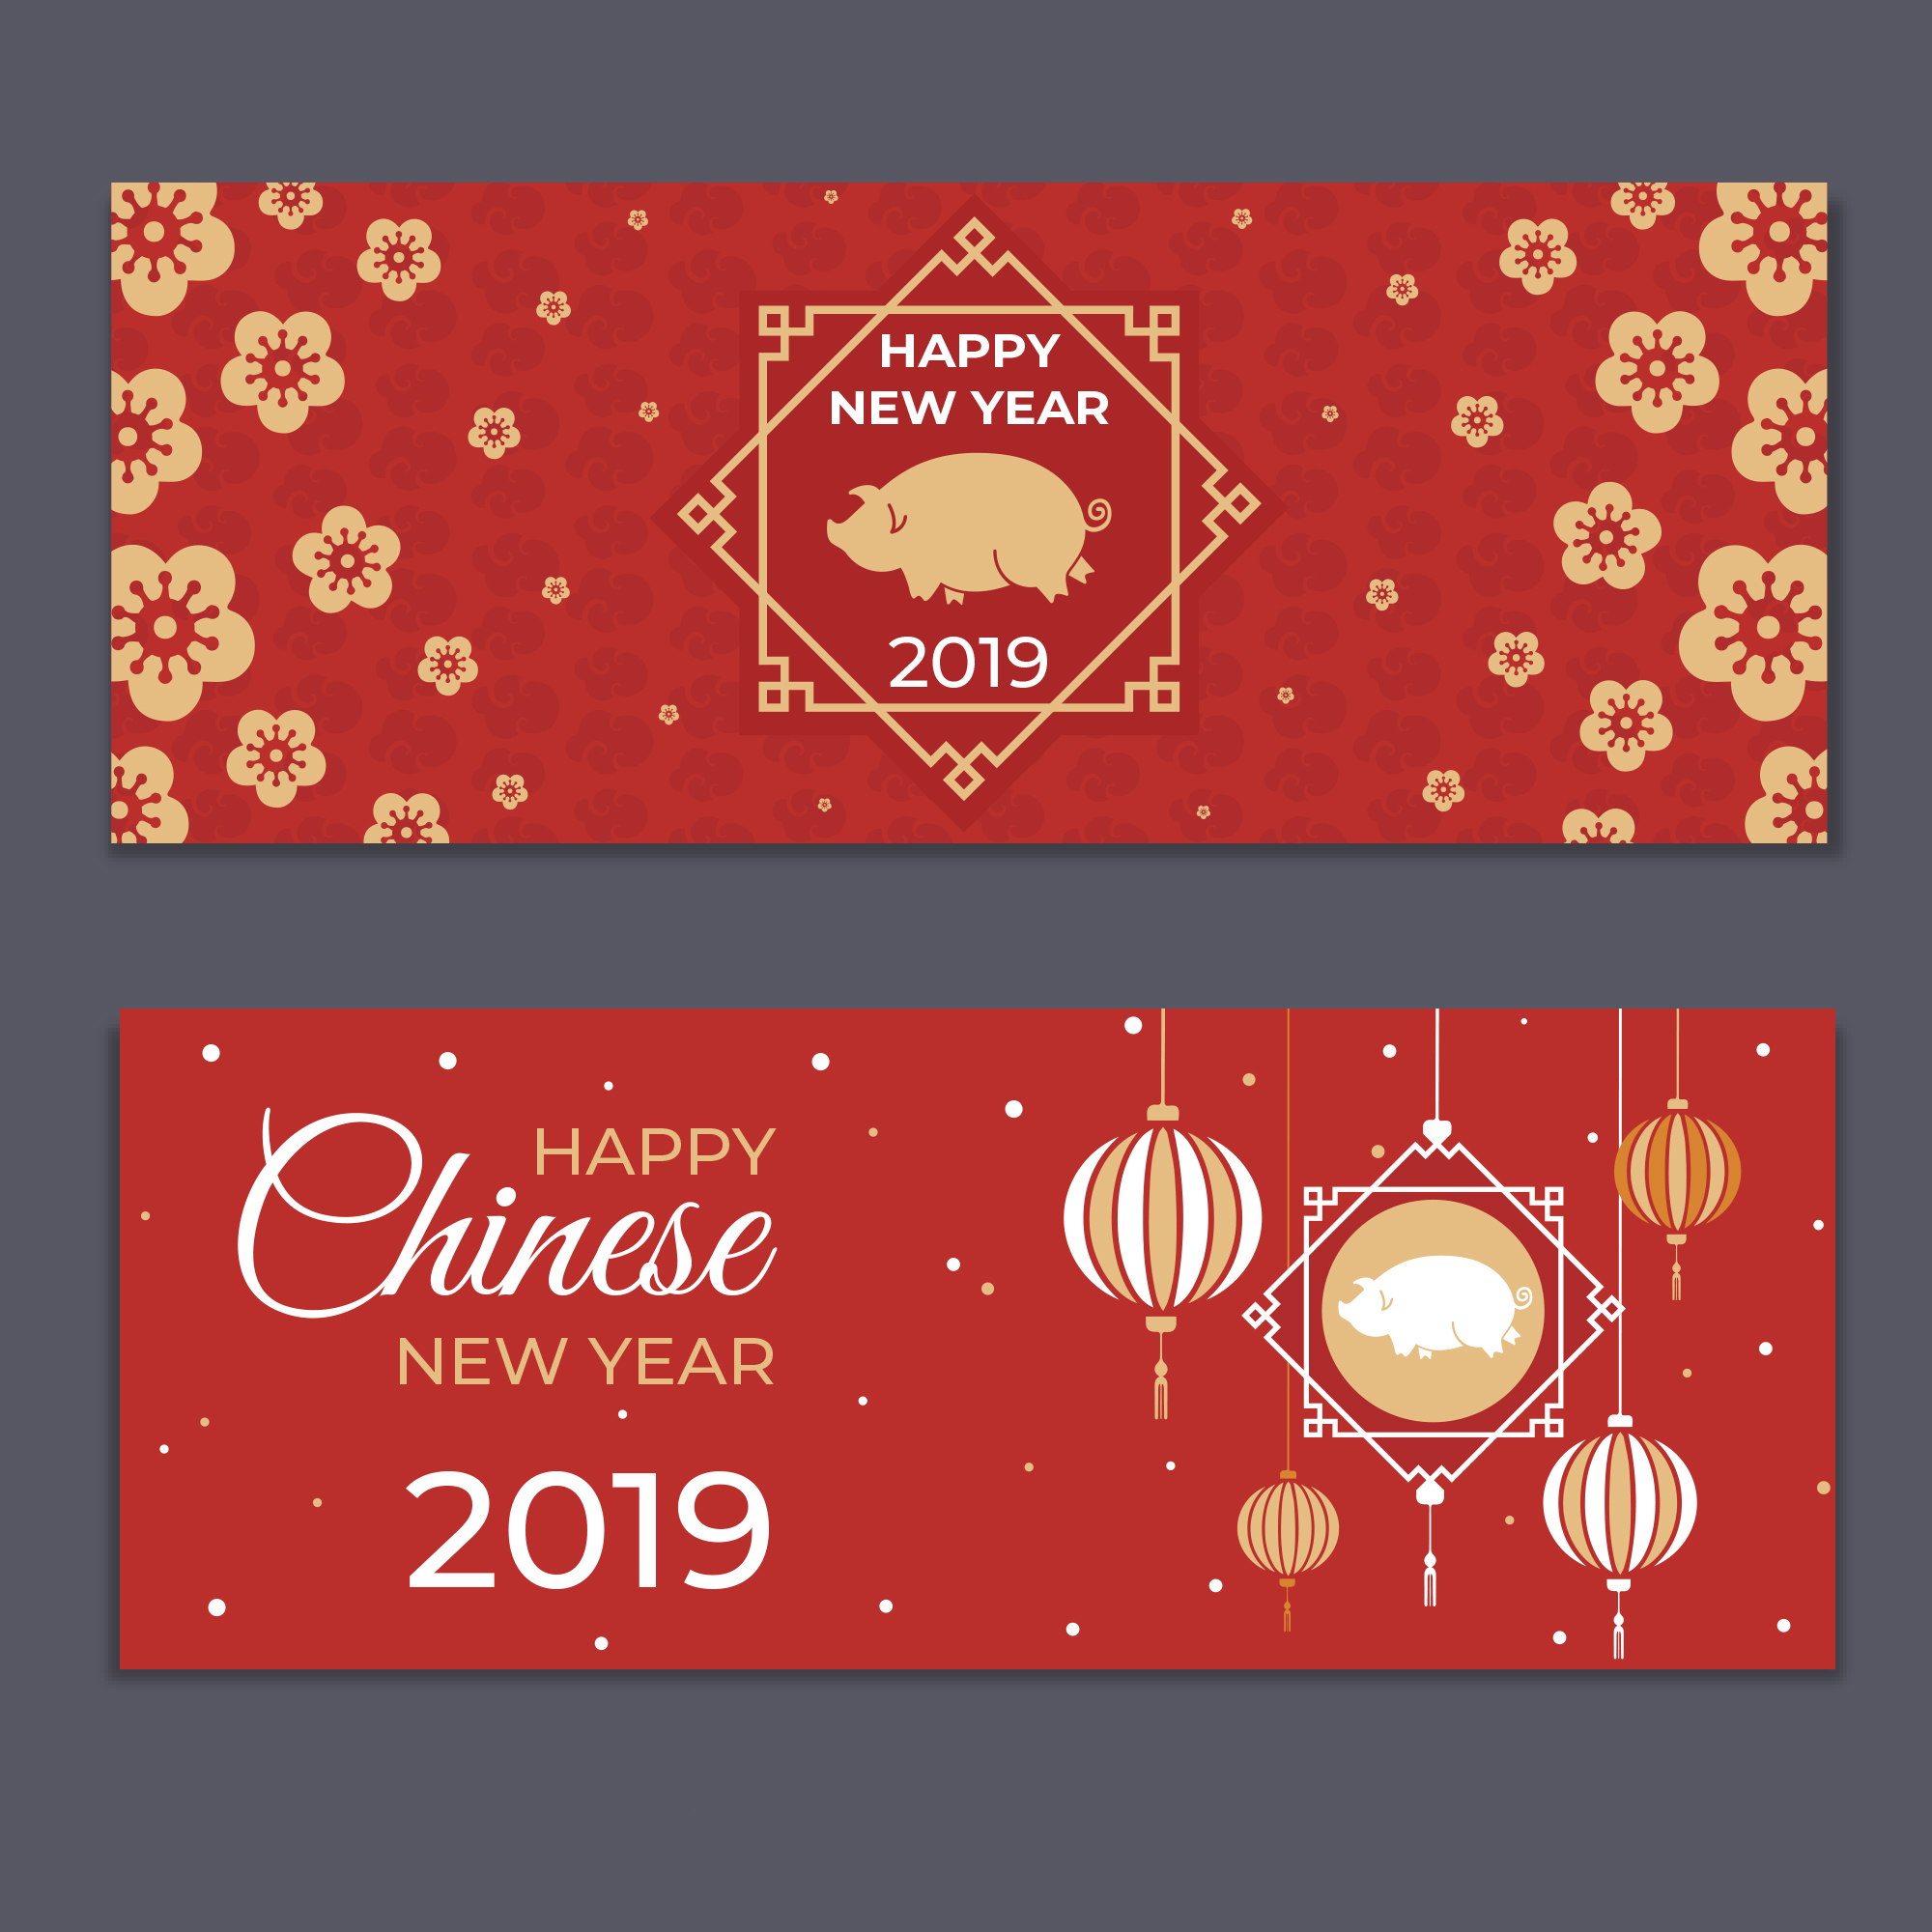 2019新年农历猪年贺卡矢量素材模板 2019 New Year Lunar Year Of The Pig Greeting Card Vector Material Template插图5